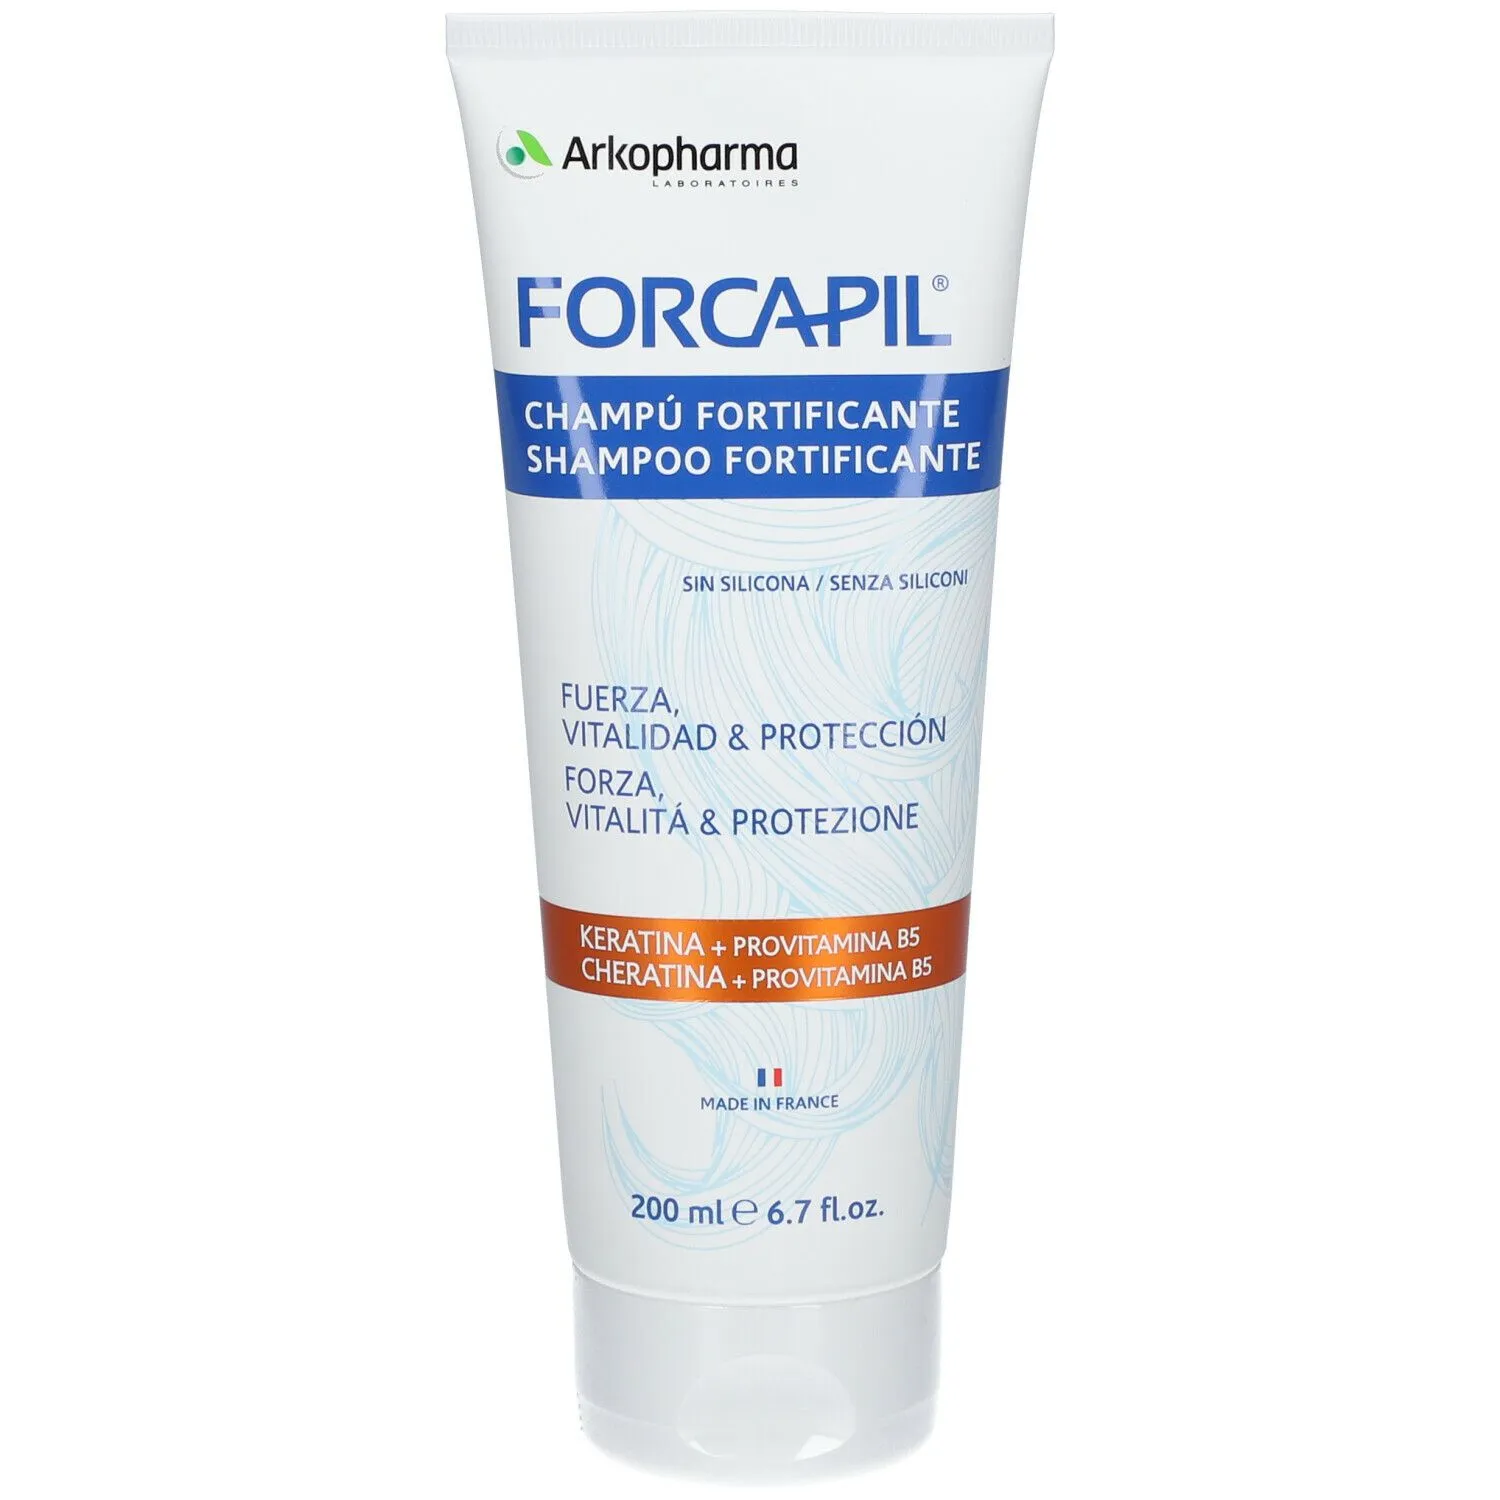 Arkopharma ® Shampoo Fortificante